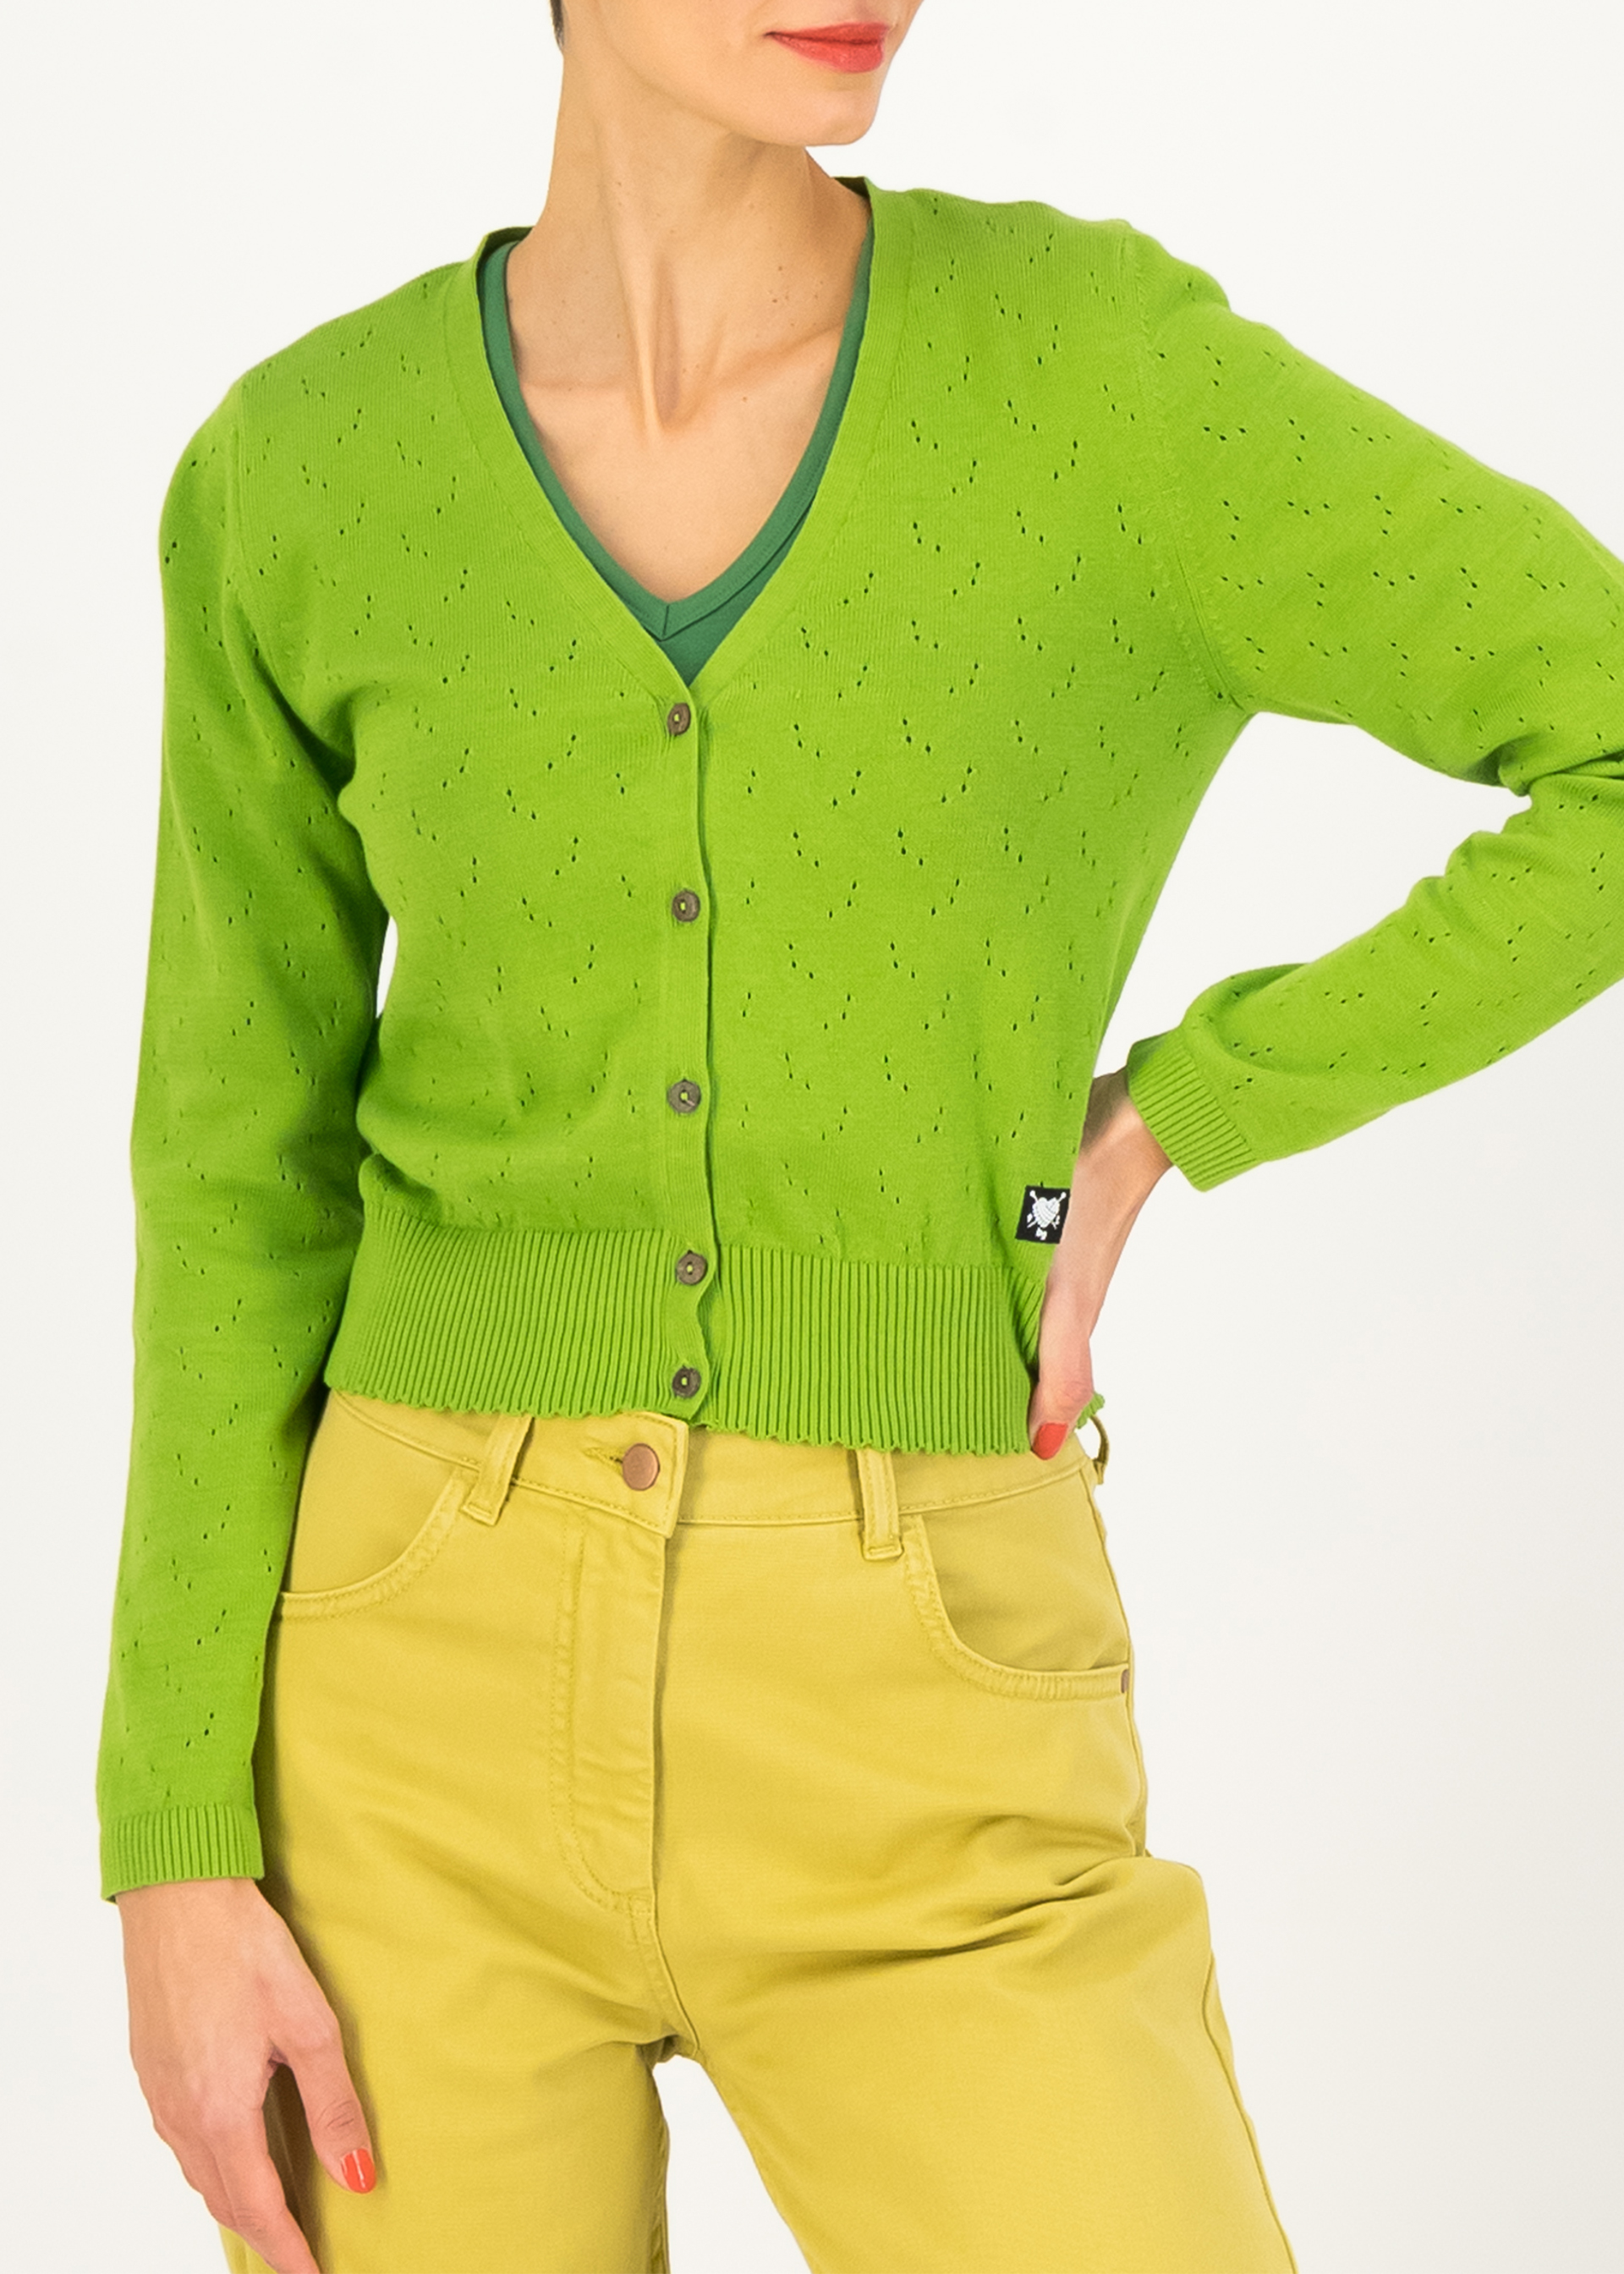 Cardigan Save the World - stunningly green knit